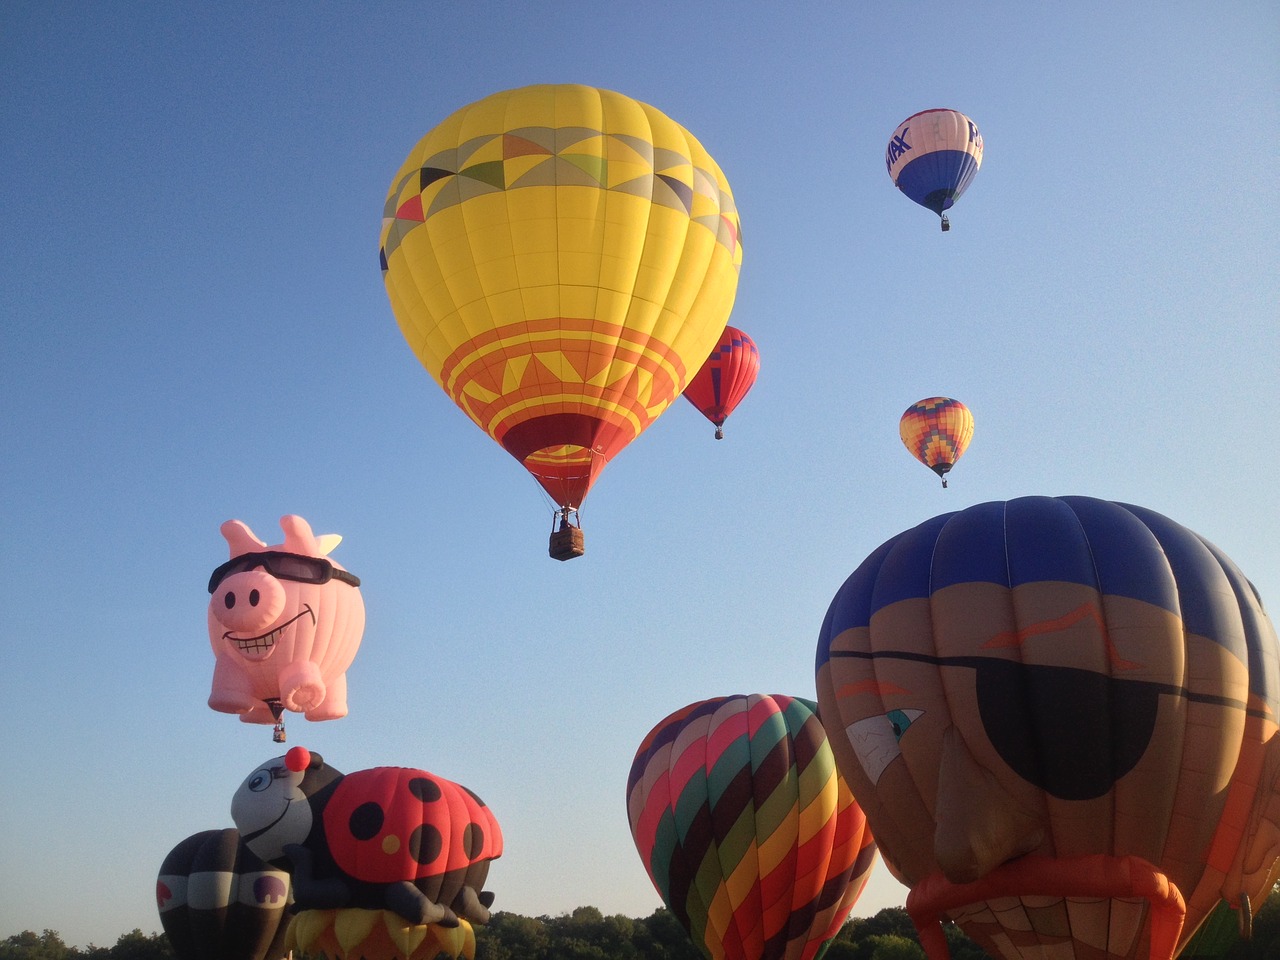 Download Hot Air Balloon Balloon Festival Plano Free Photo.